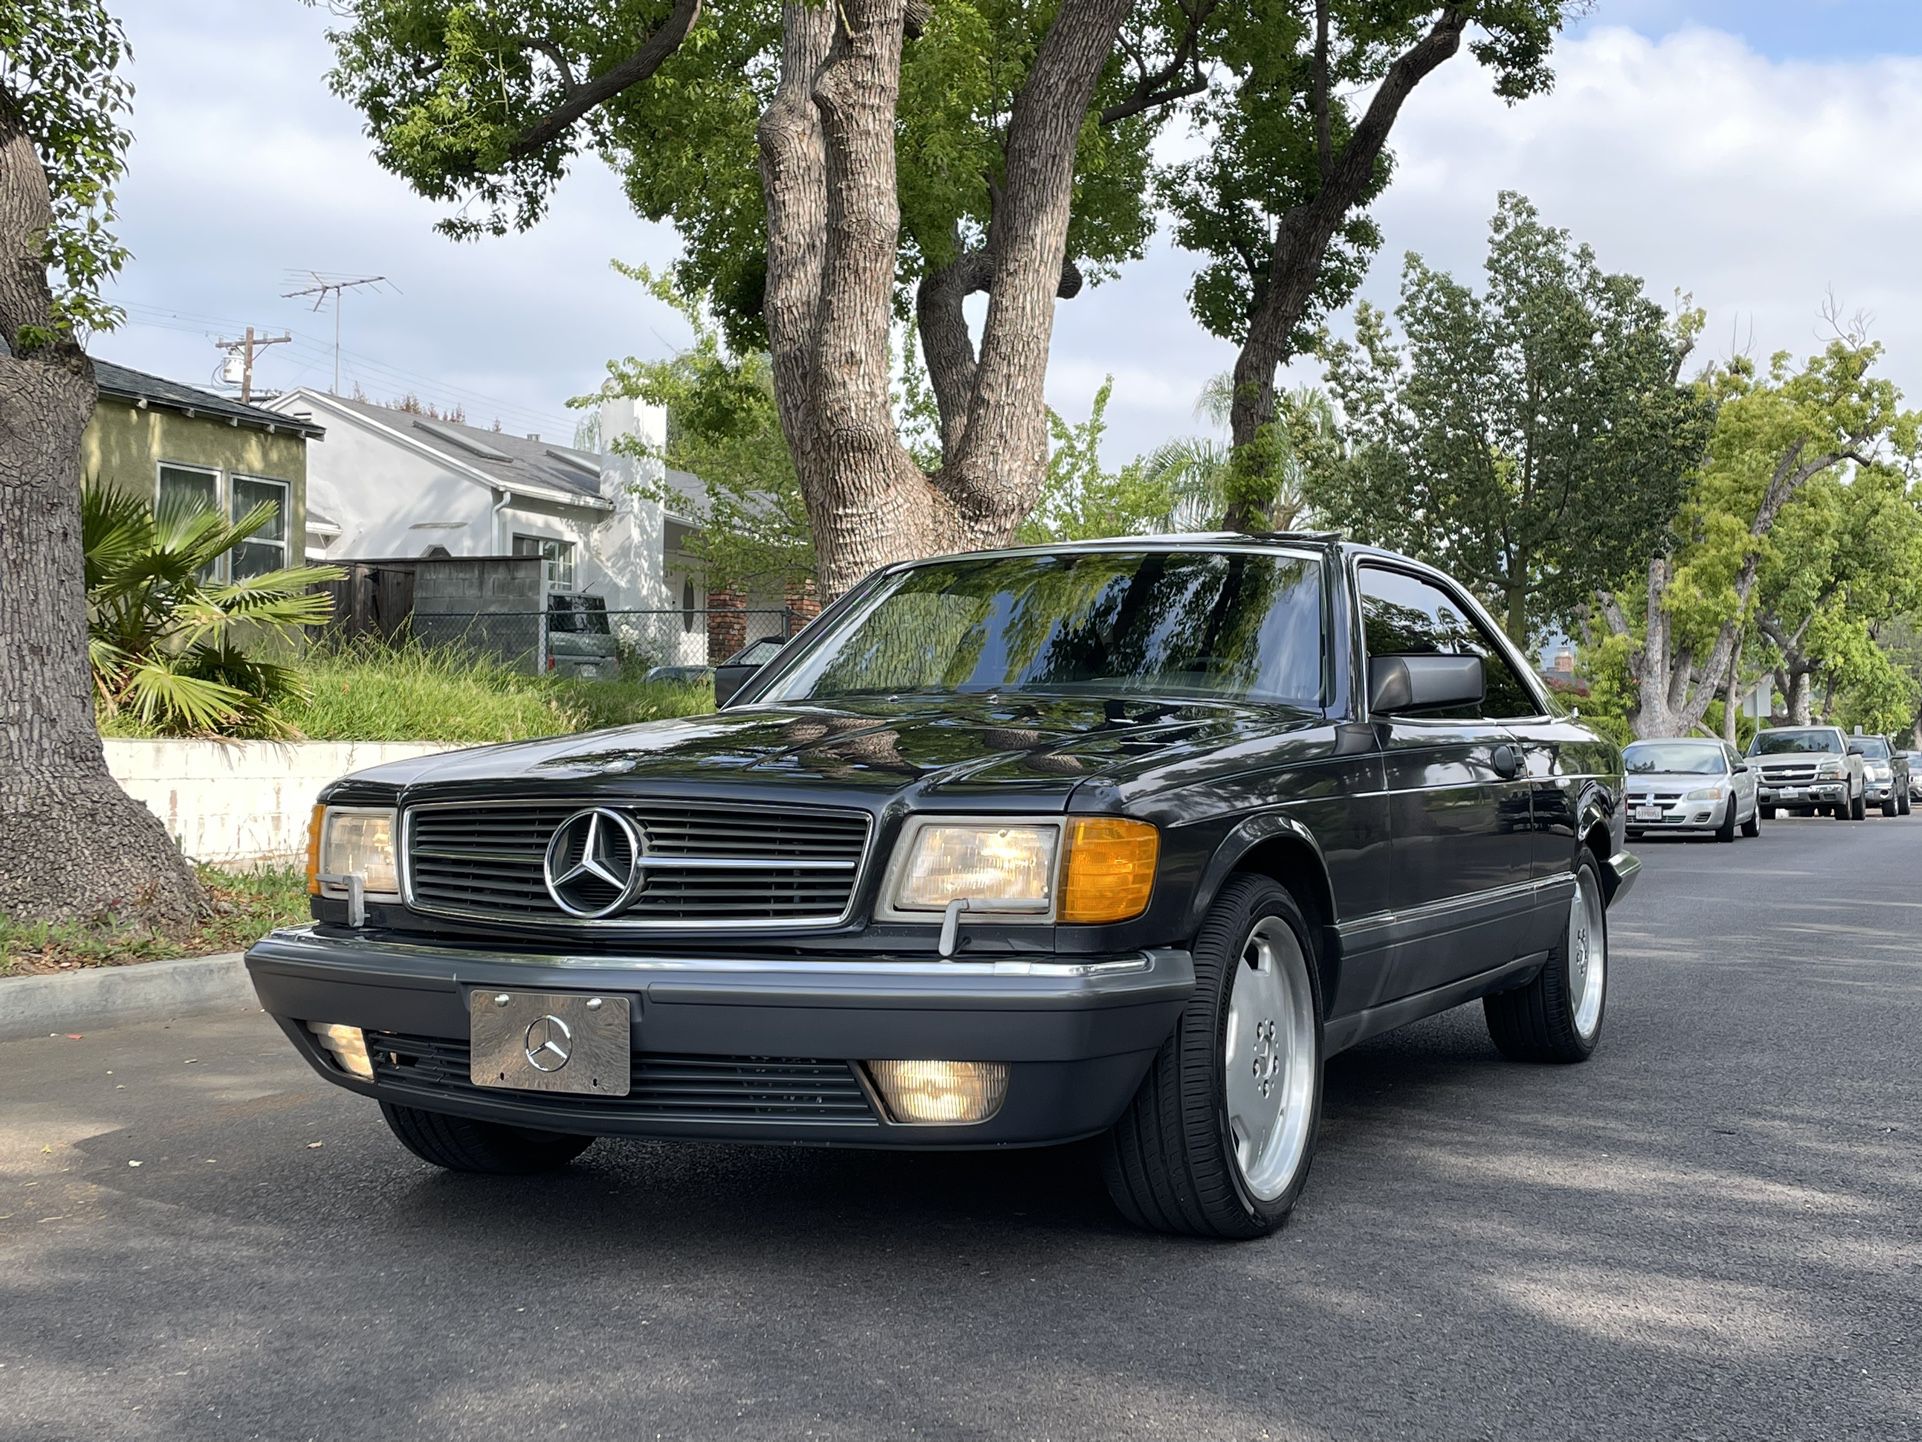 1991 Mercedes-Benz 560